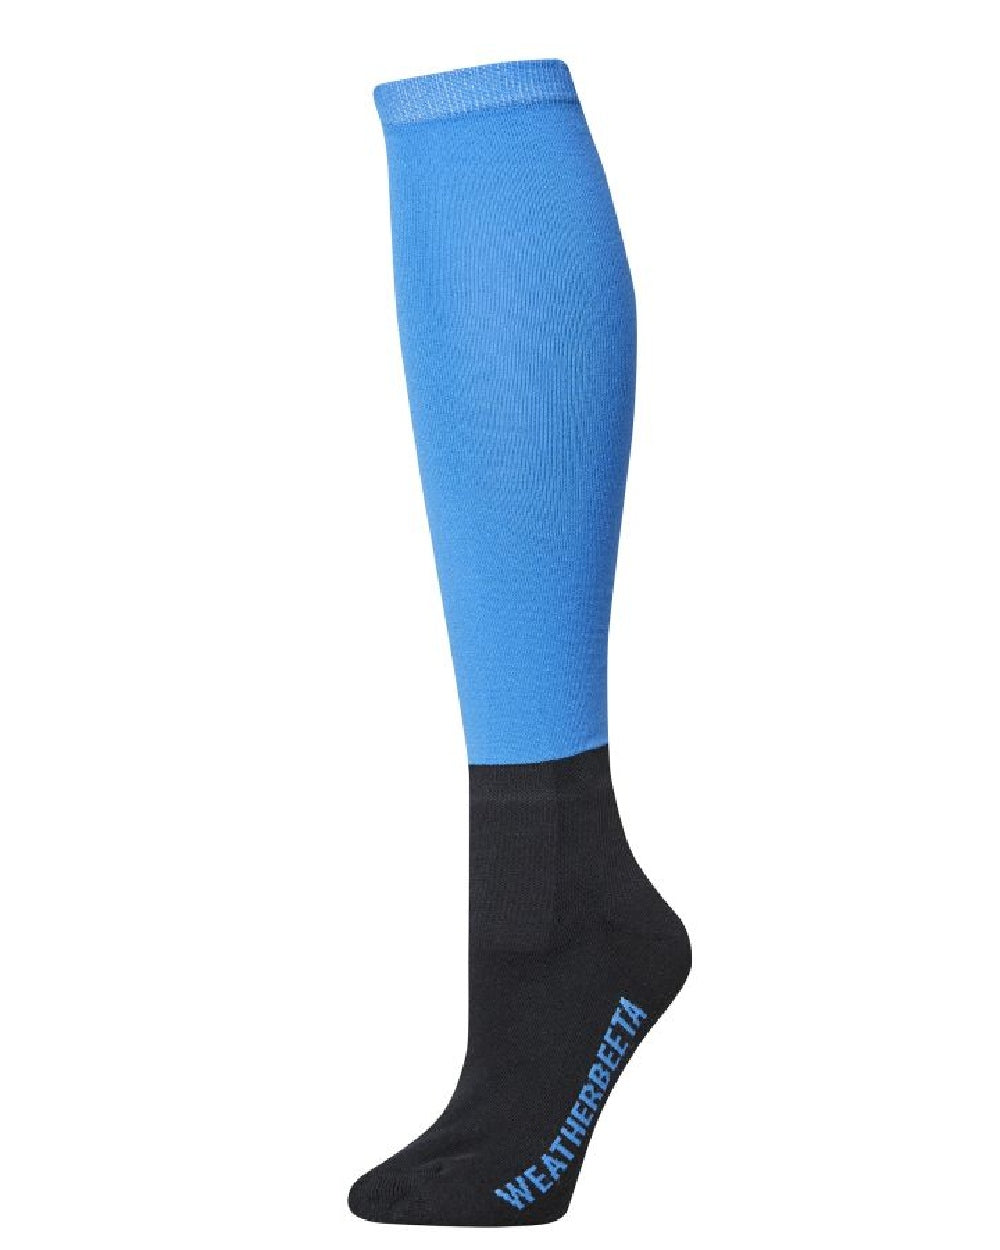 WeatherBeeta Prime Stocking Socks in Royal Blue  